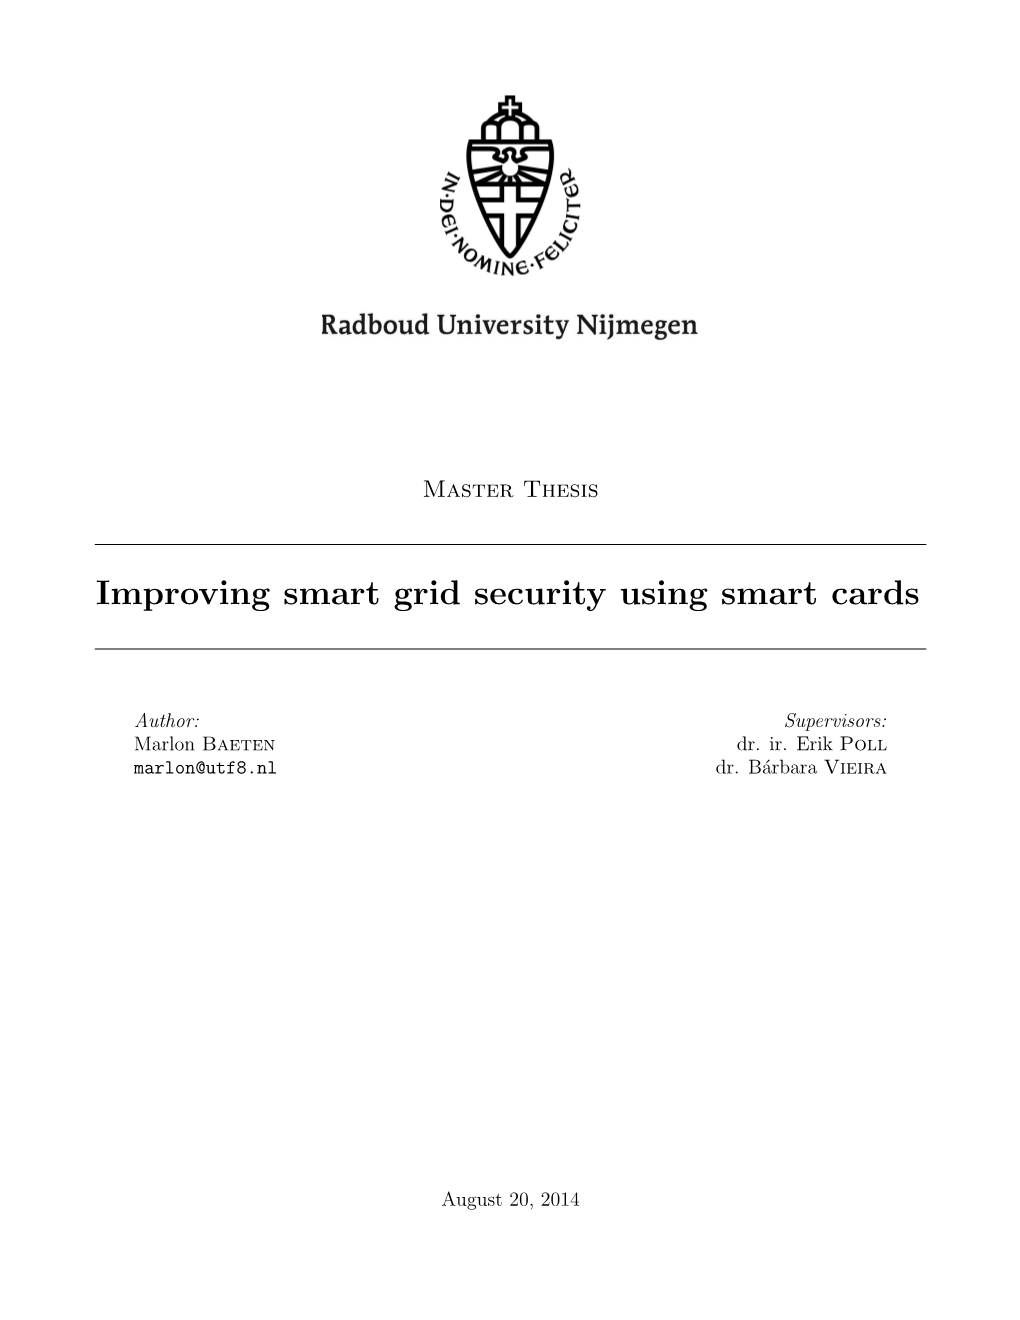 Improving Smart Grid Security Using Smart Cards